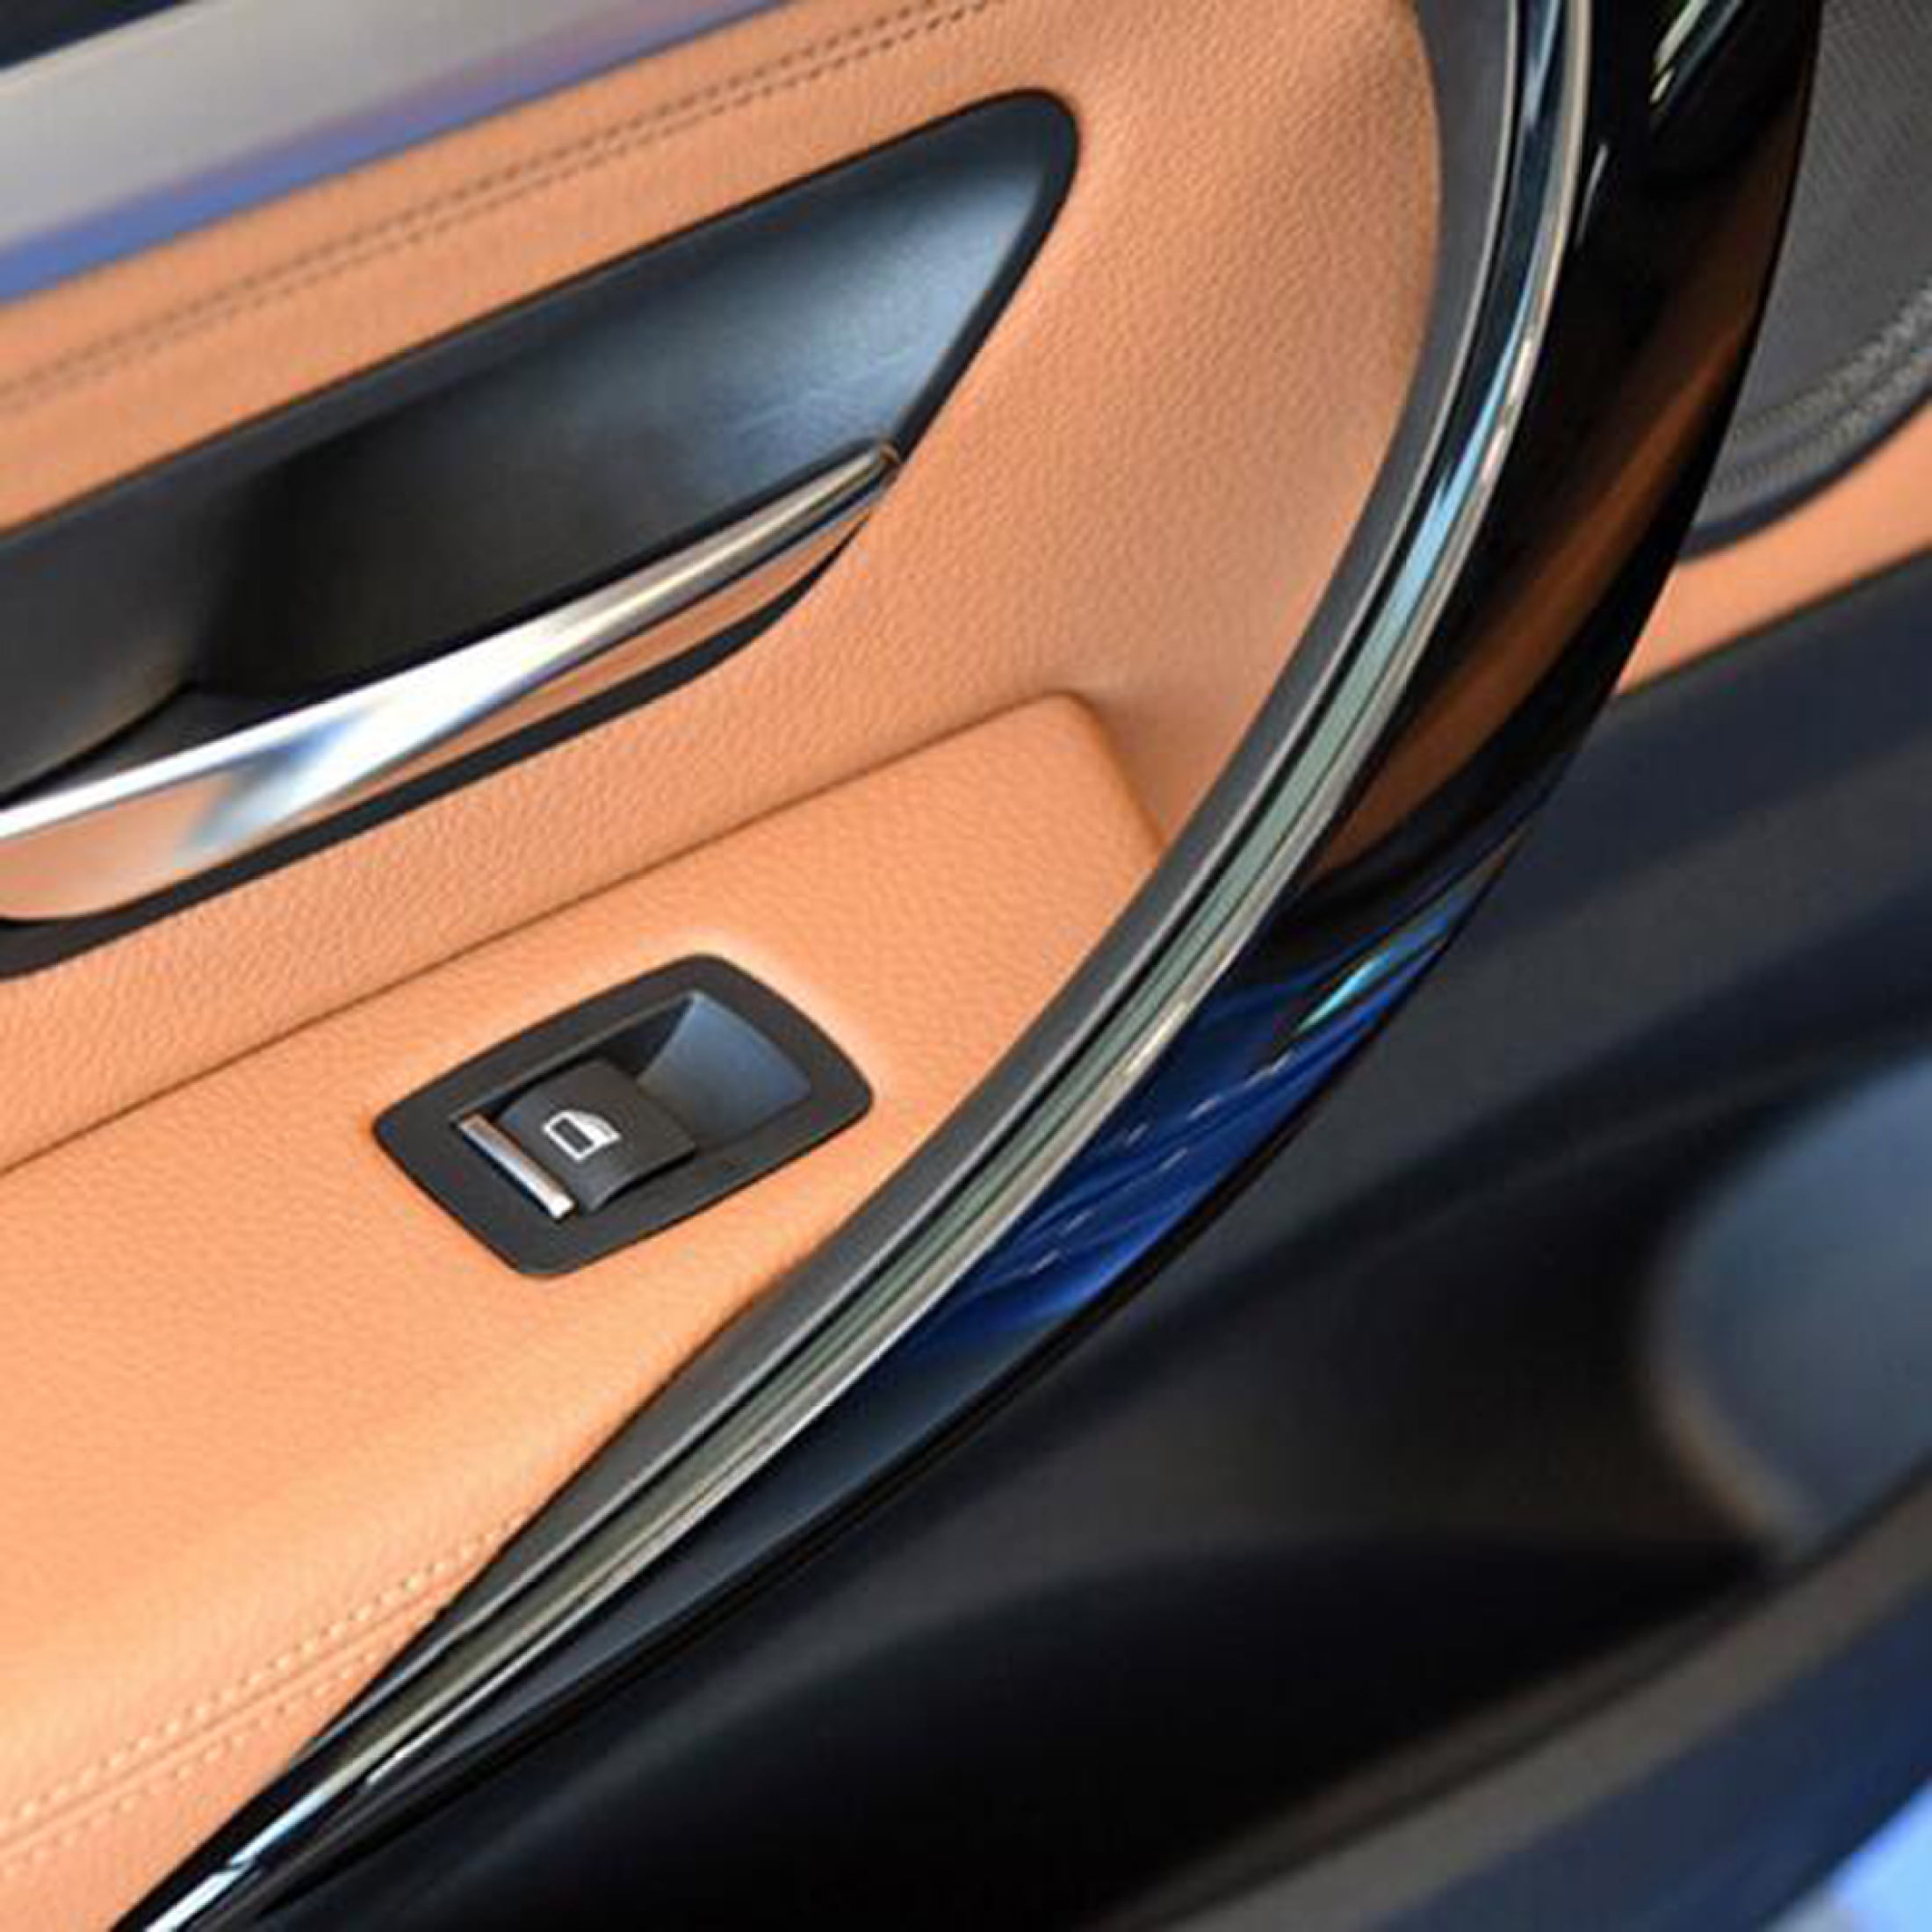  MoreChioce Car Door Handle Cover, Suede Leather Auto